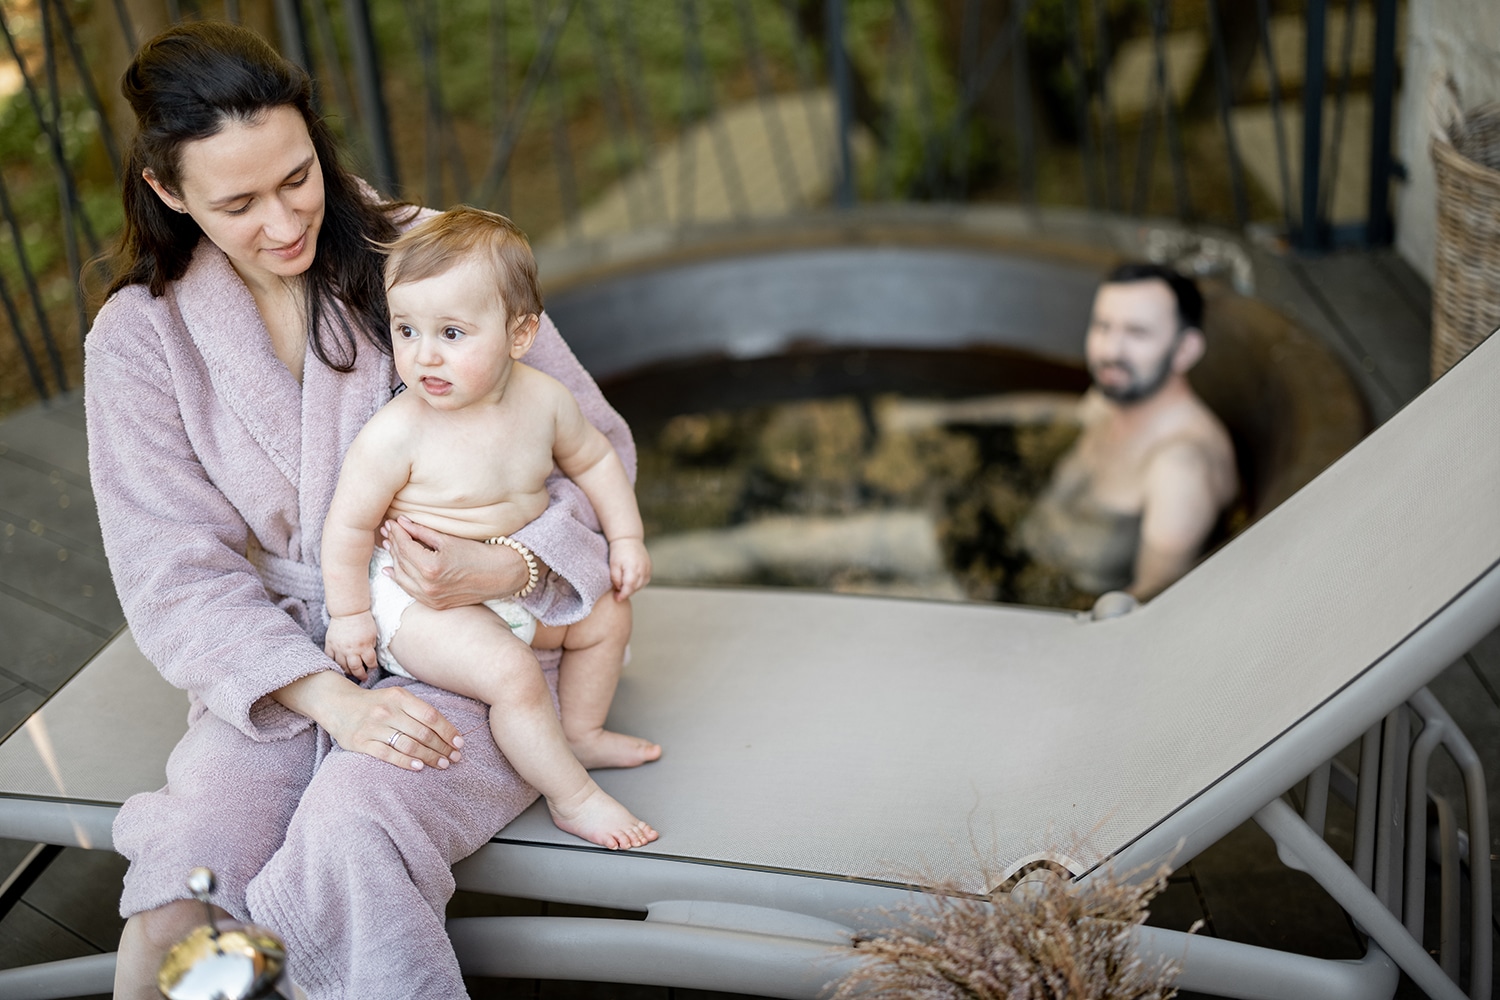 can-you-use-hot-tub-while-breast-feeding